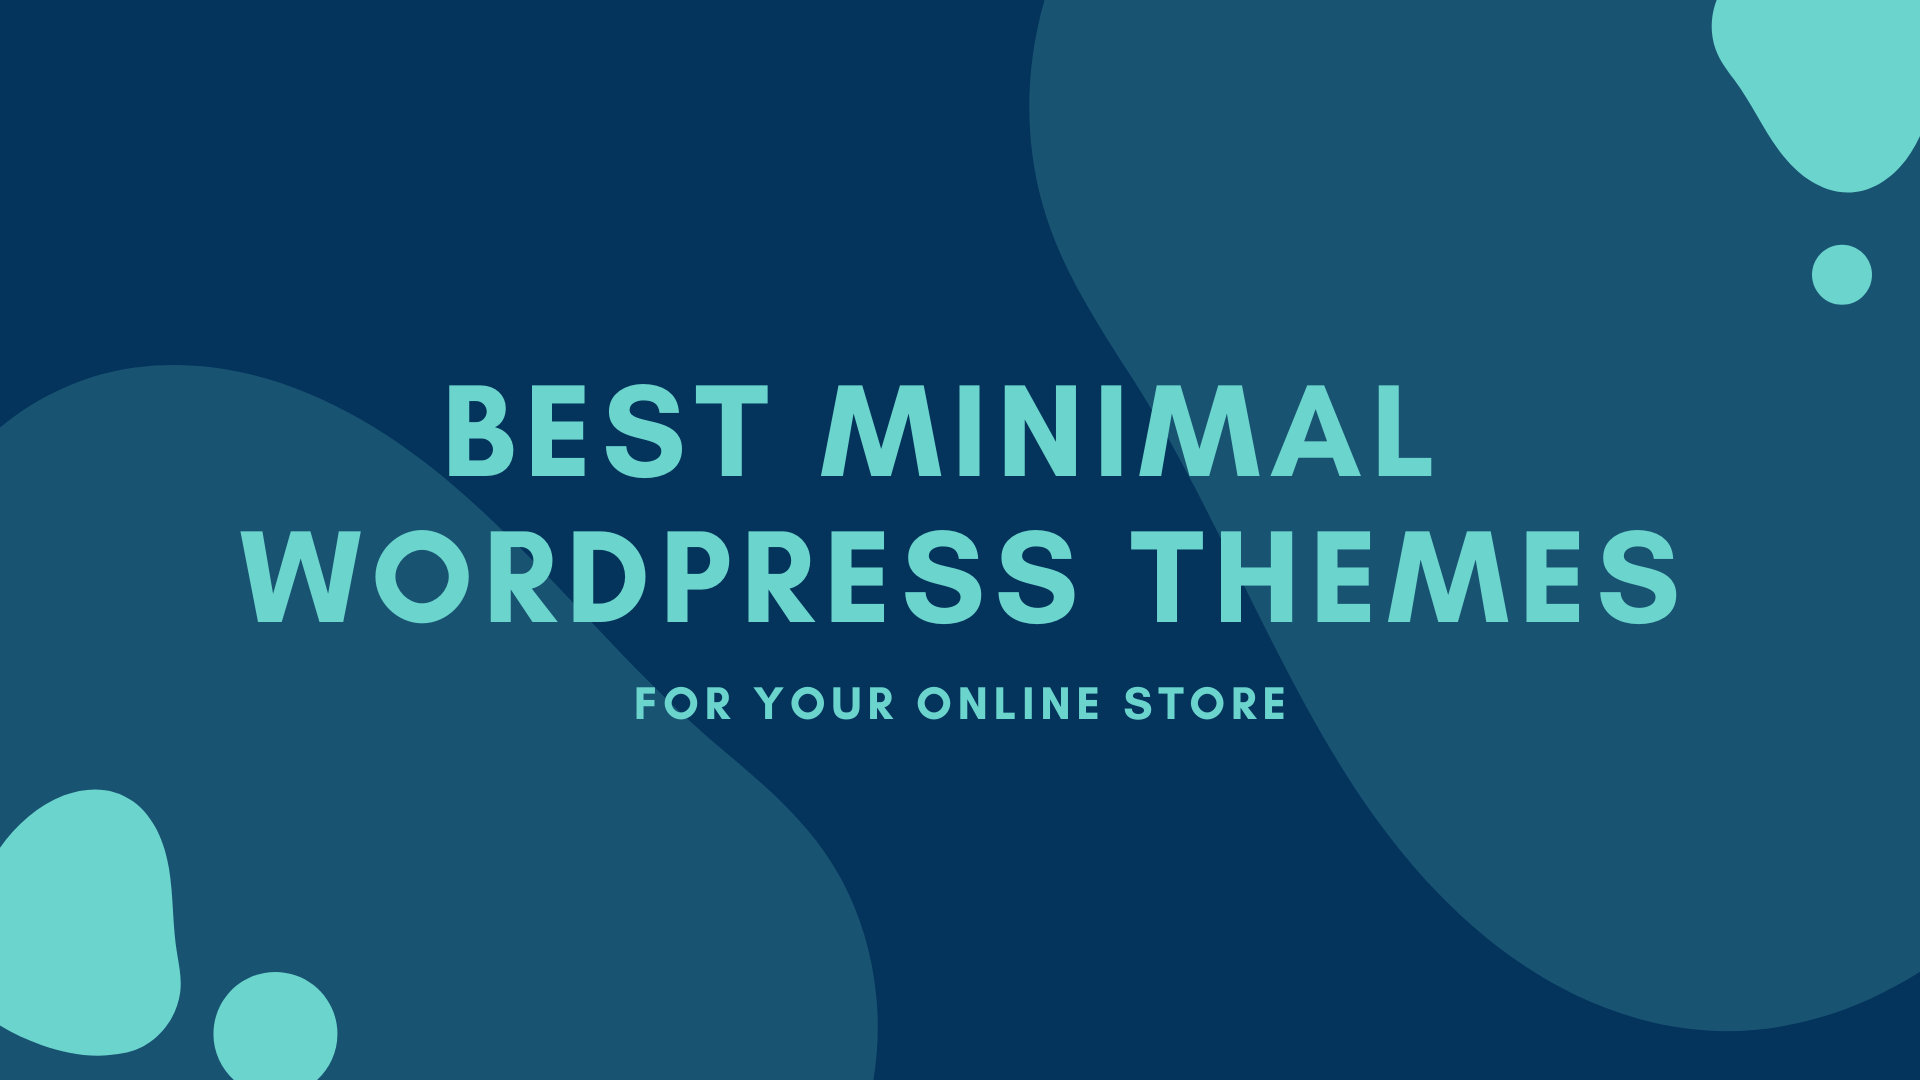 minimal WordPress themes